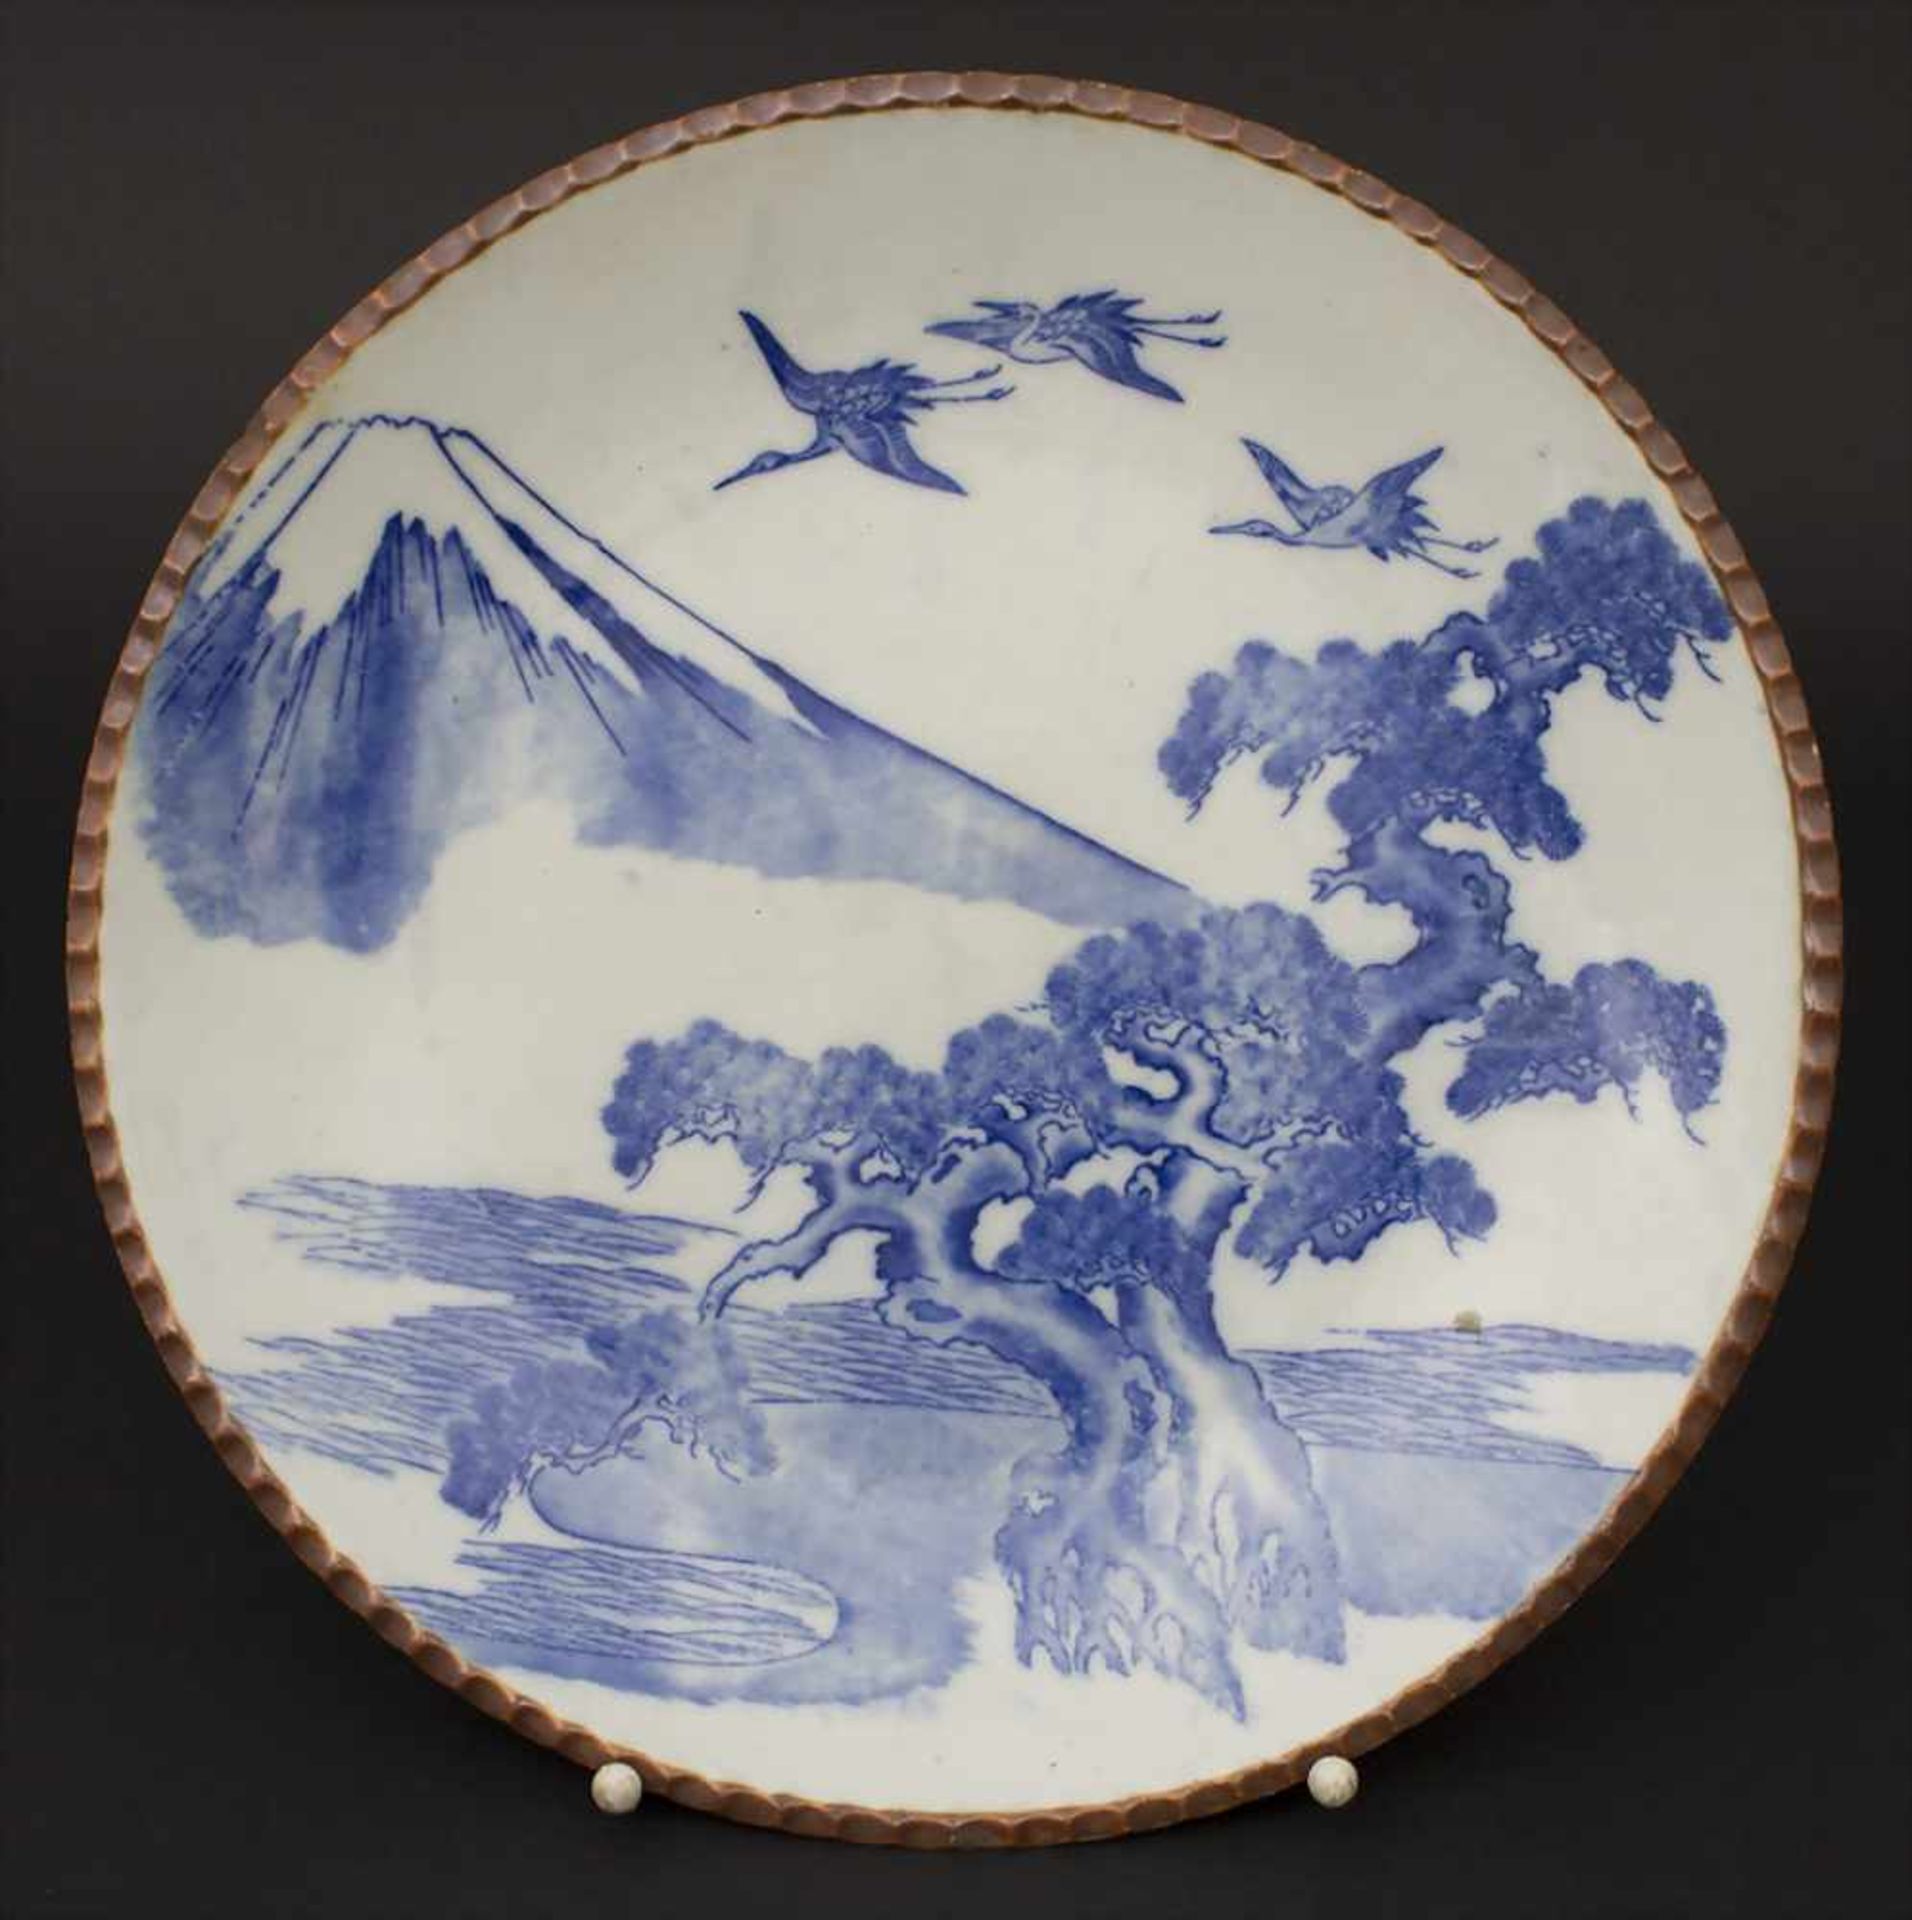 Große Platte / A large plate, Japan, um 1900Material: Porzellan, blau bemalt, glasiert, Rand braun